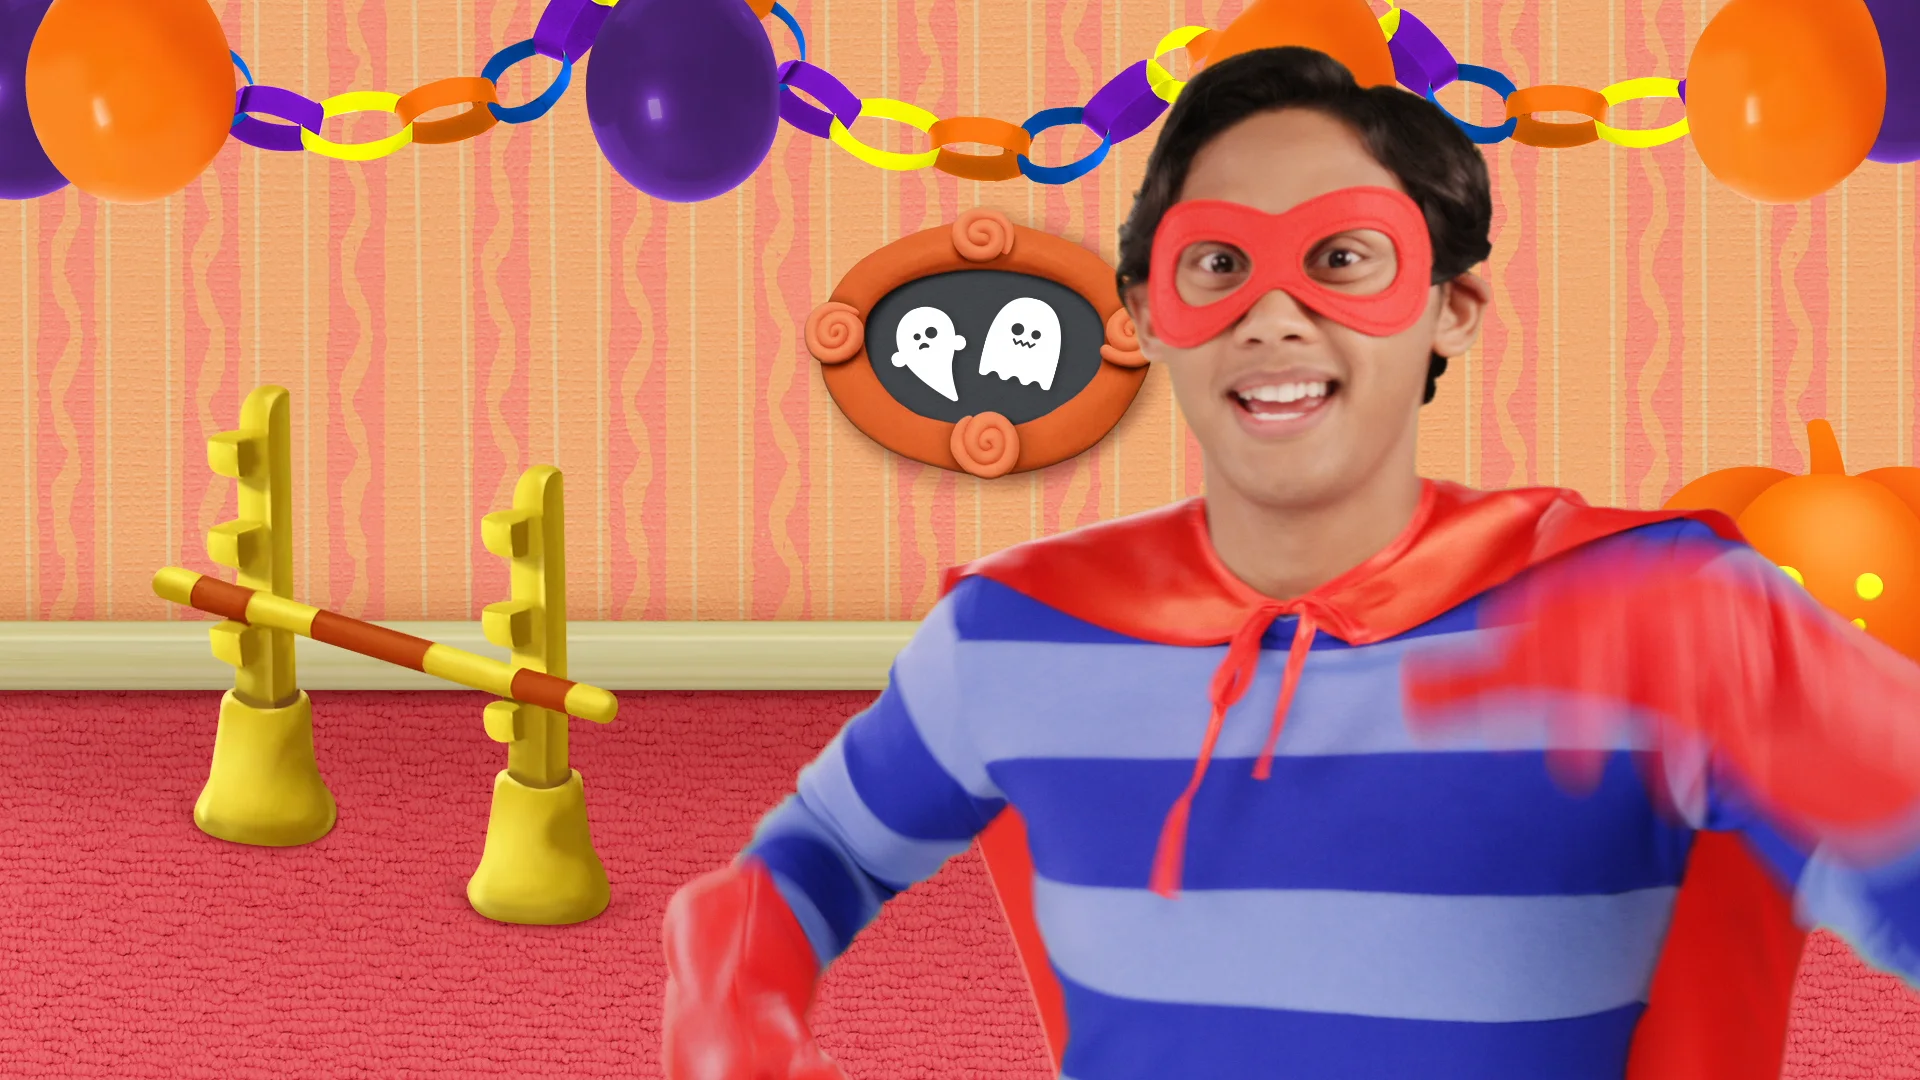 Nick Jr. Halloween 2019 Campaign on Vimeo